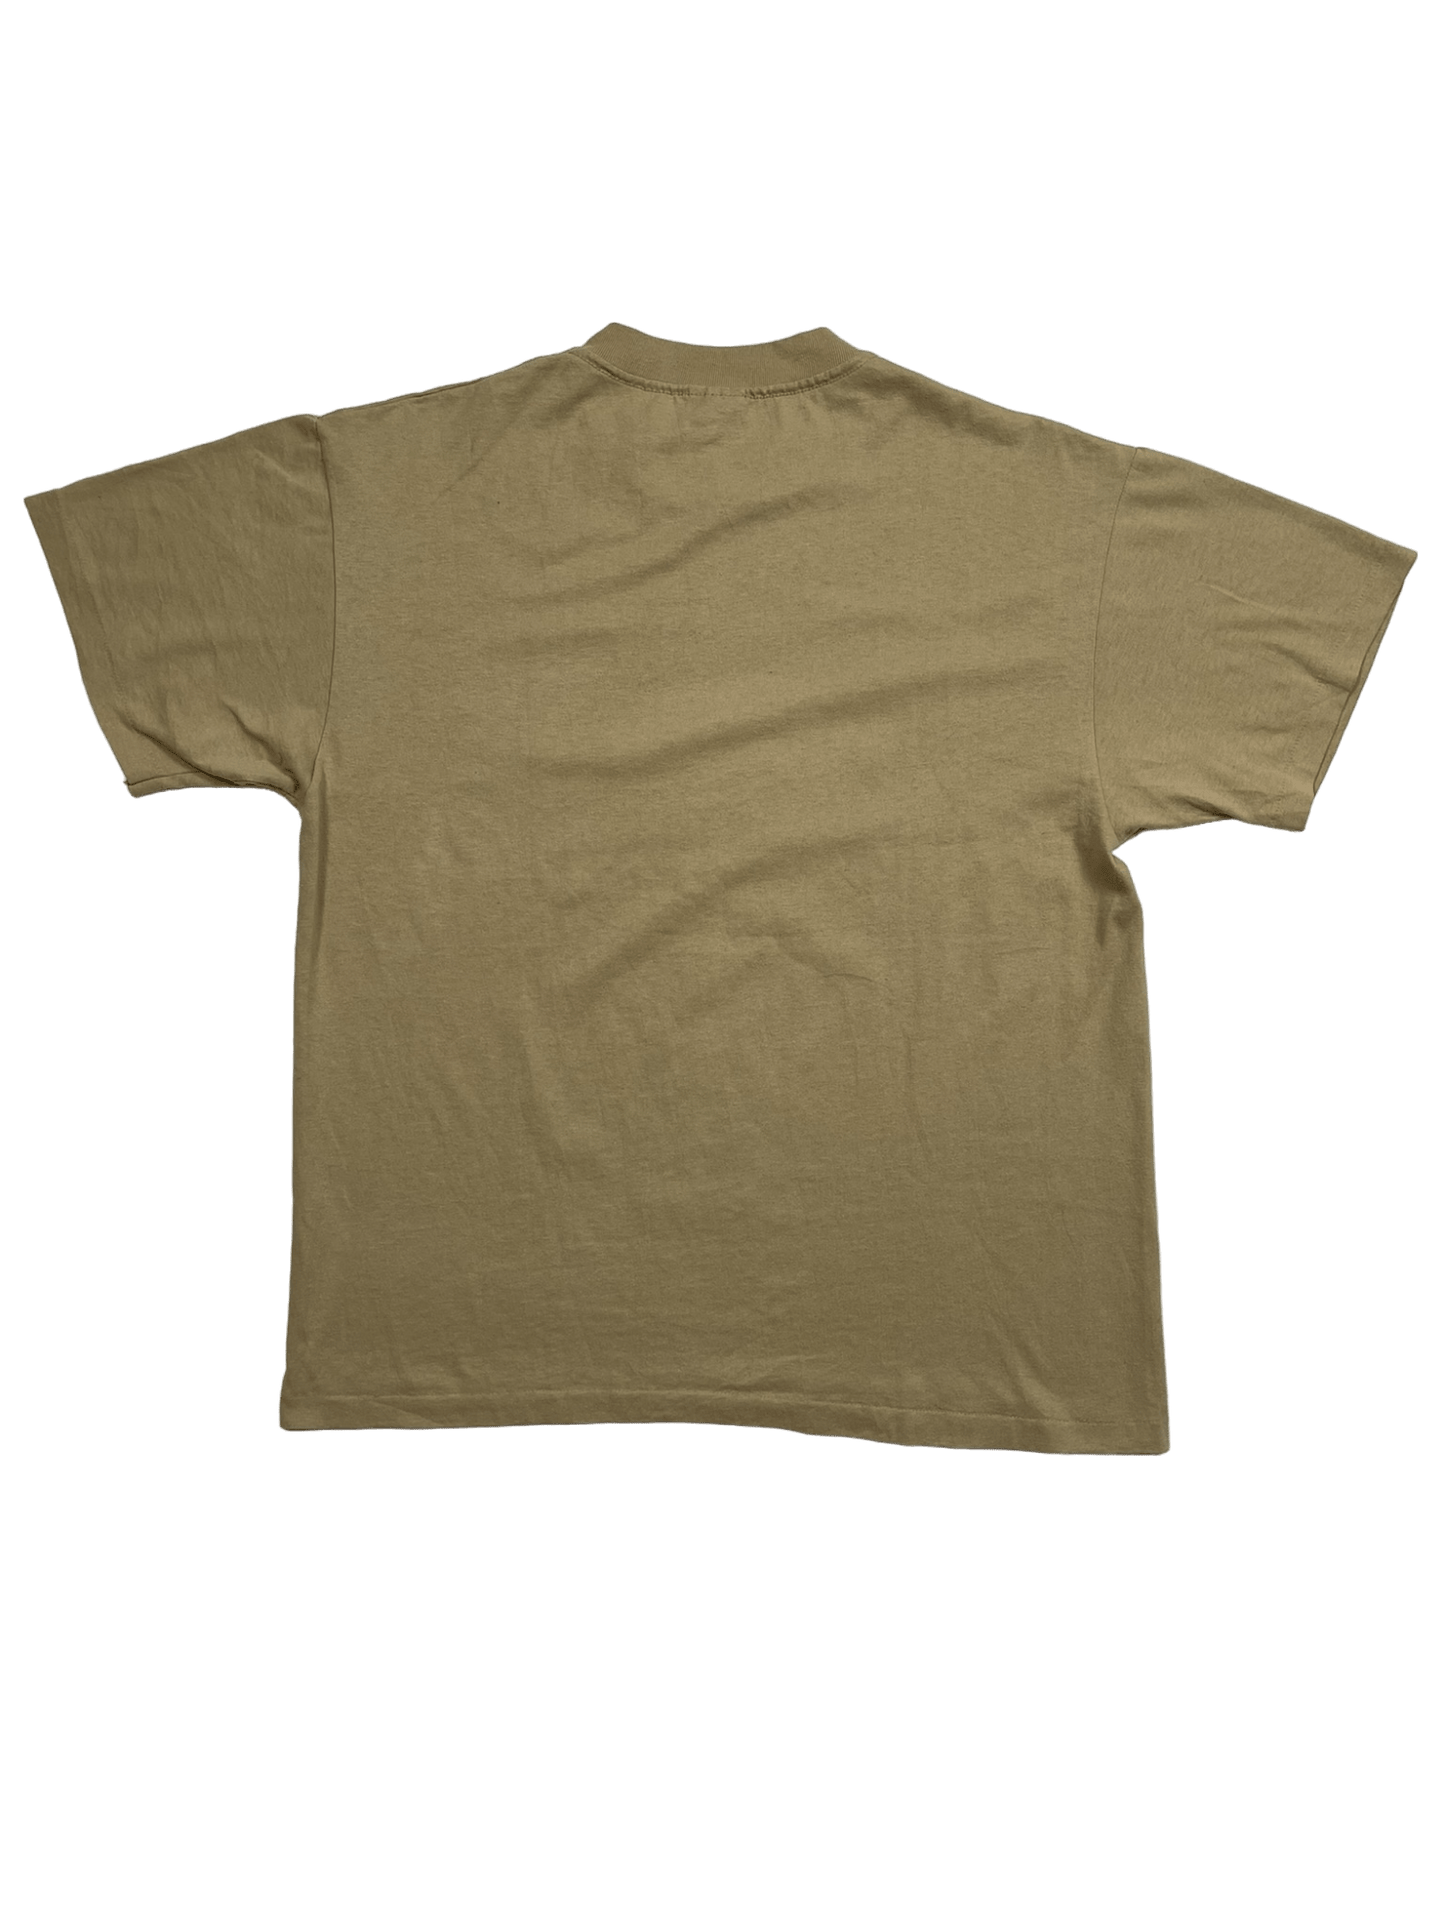 The Vintage Racks T-Shirt Oklahoma City - L